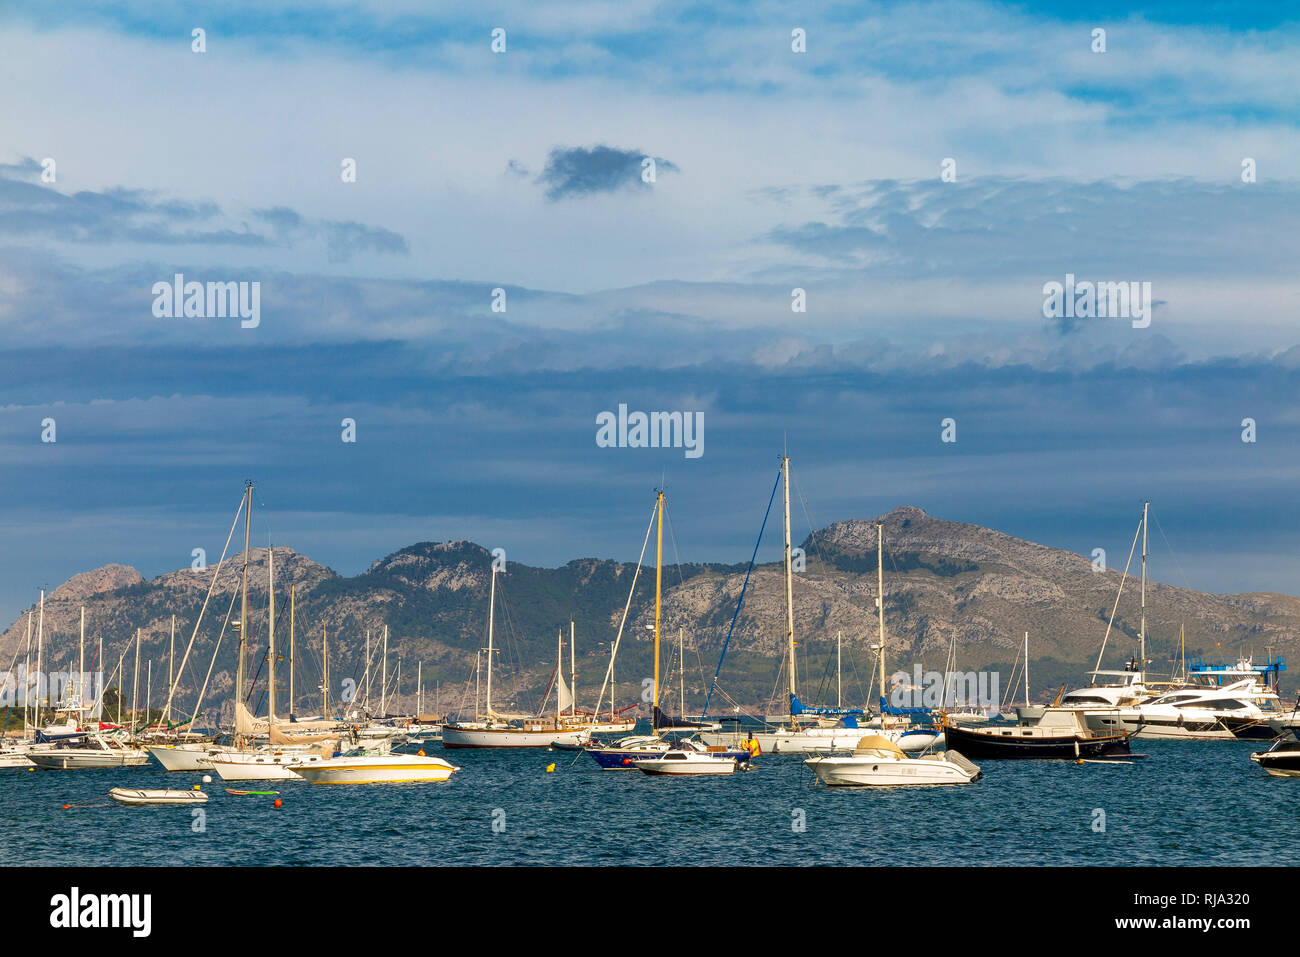 Boats in the bay, Port de Pollenca, northeast of the island Mallorca, Mediterranean, Balearic Islands, Spain, Southern Europe Stock Photo